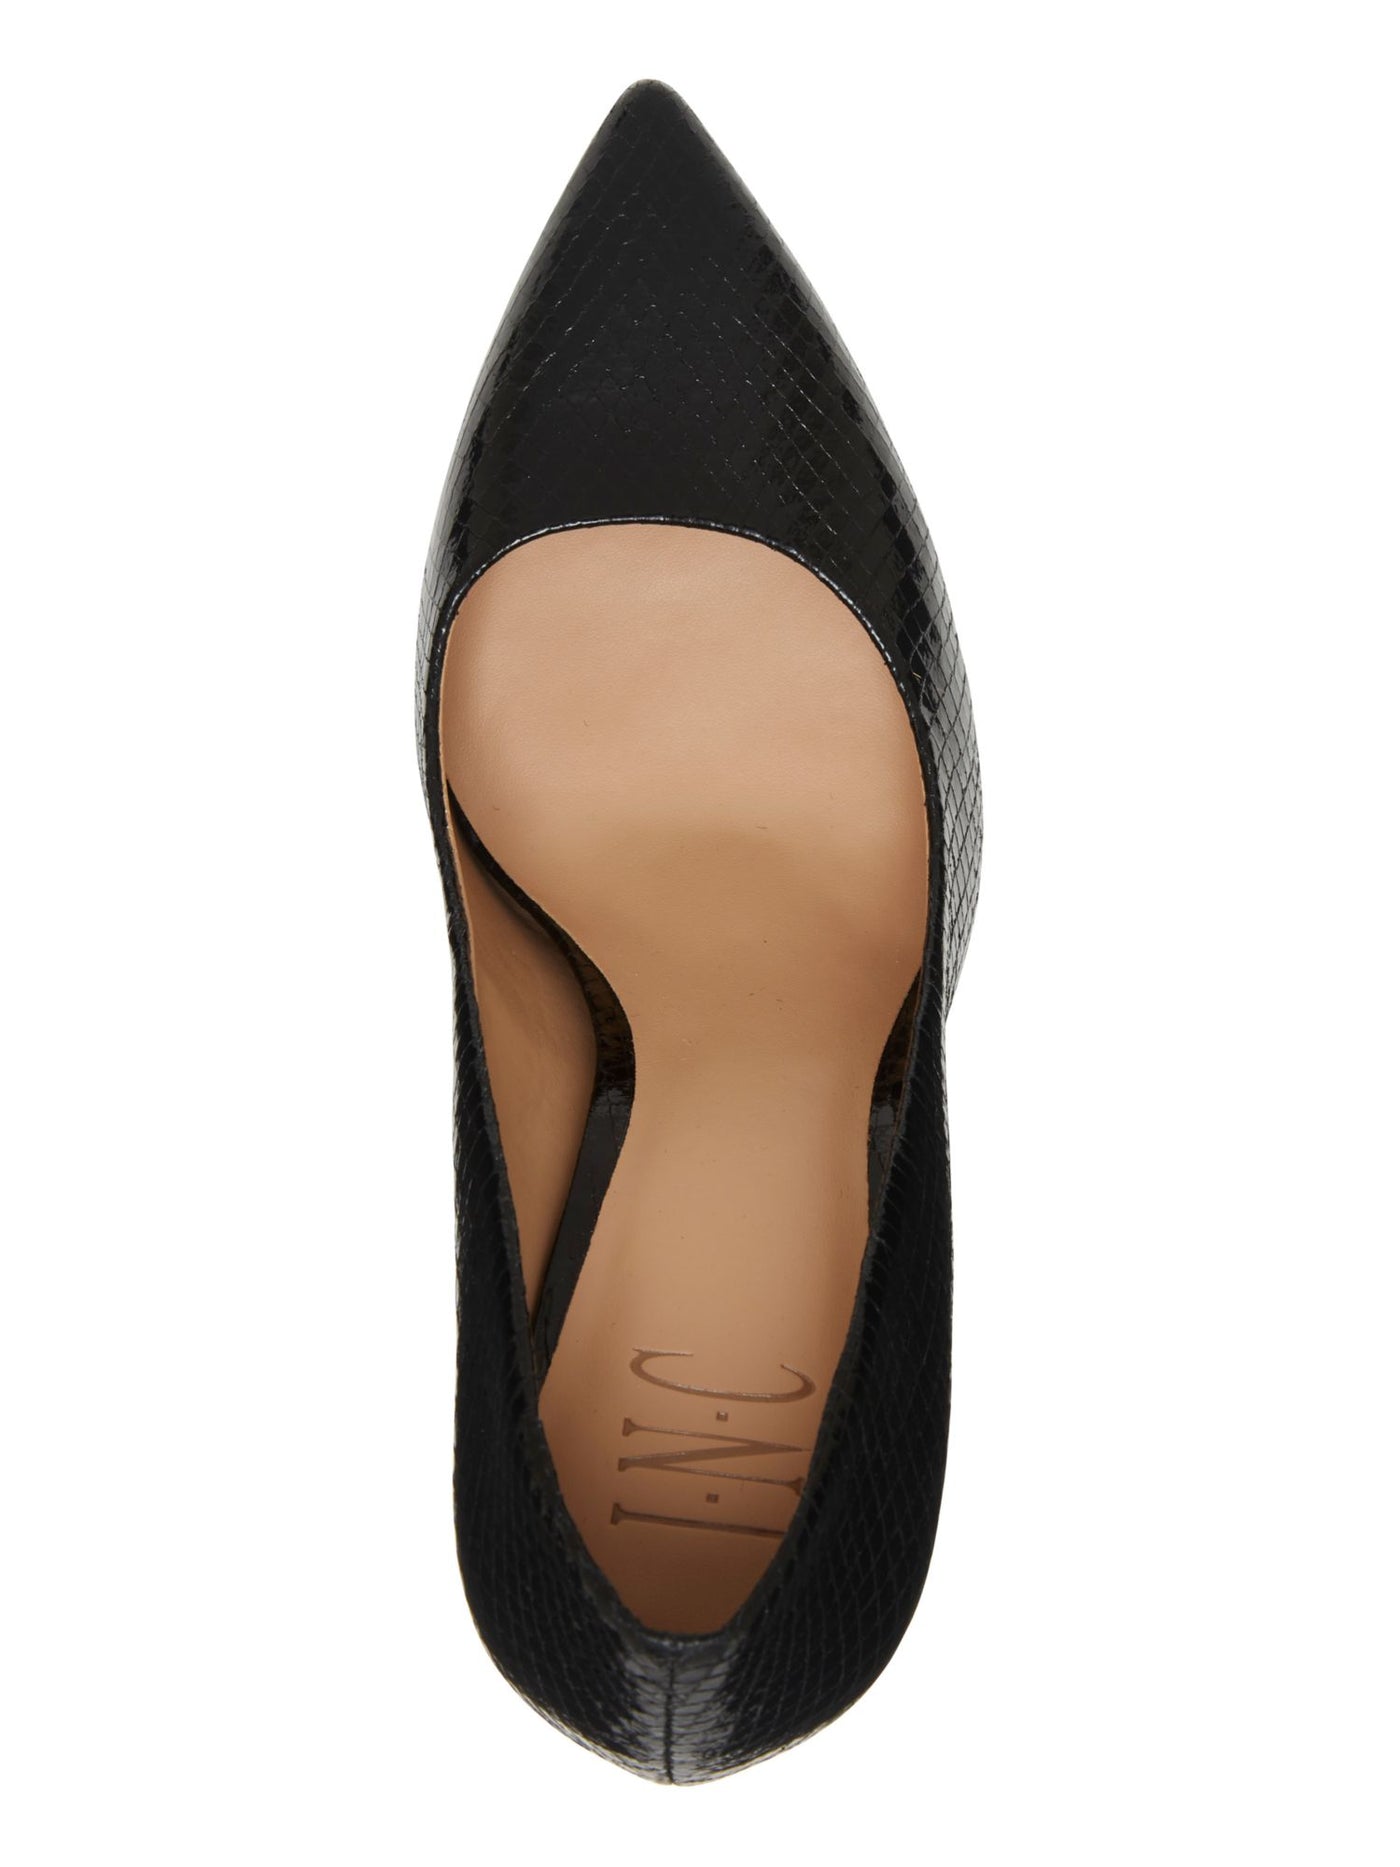 INC Womens Black Snakeskin Padded Kaimi Pointed Toe Stiletto Slip On Pumps Shoes 8 M